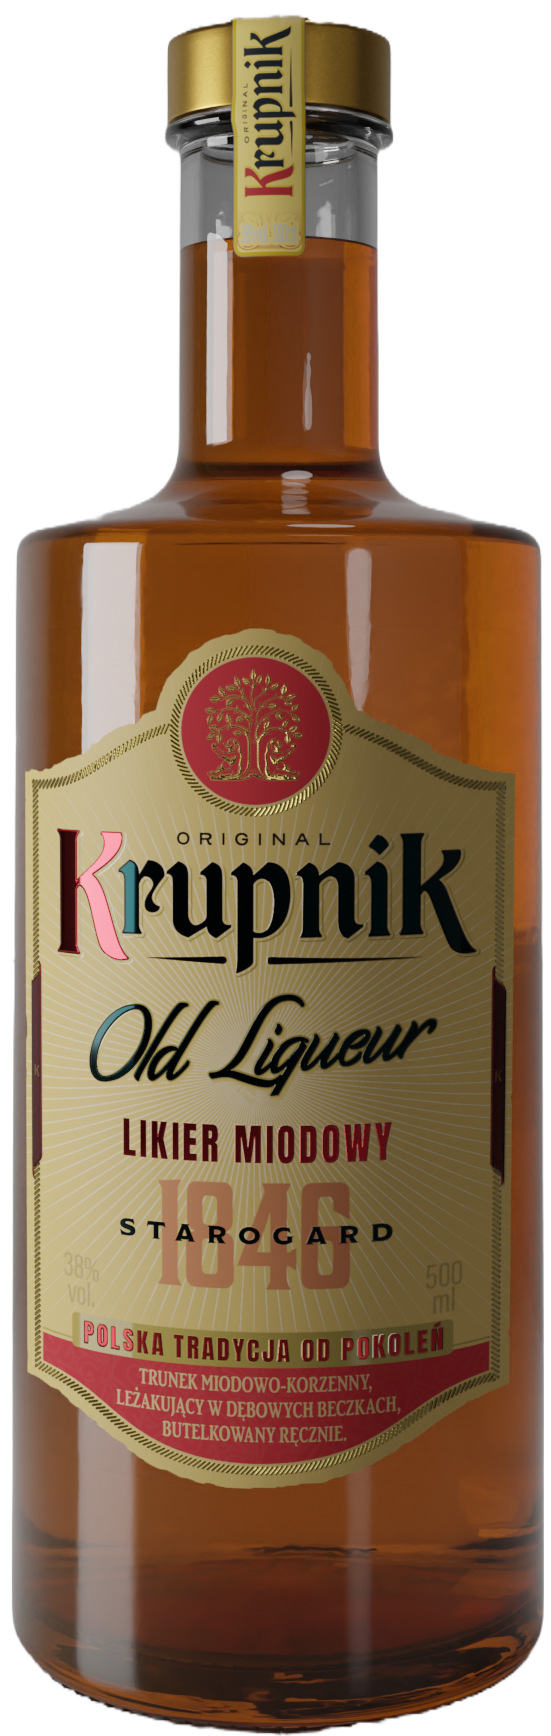 Krupnik Old Liqueur 50cl